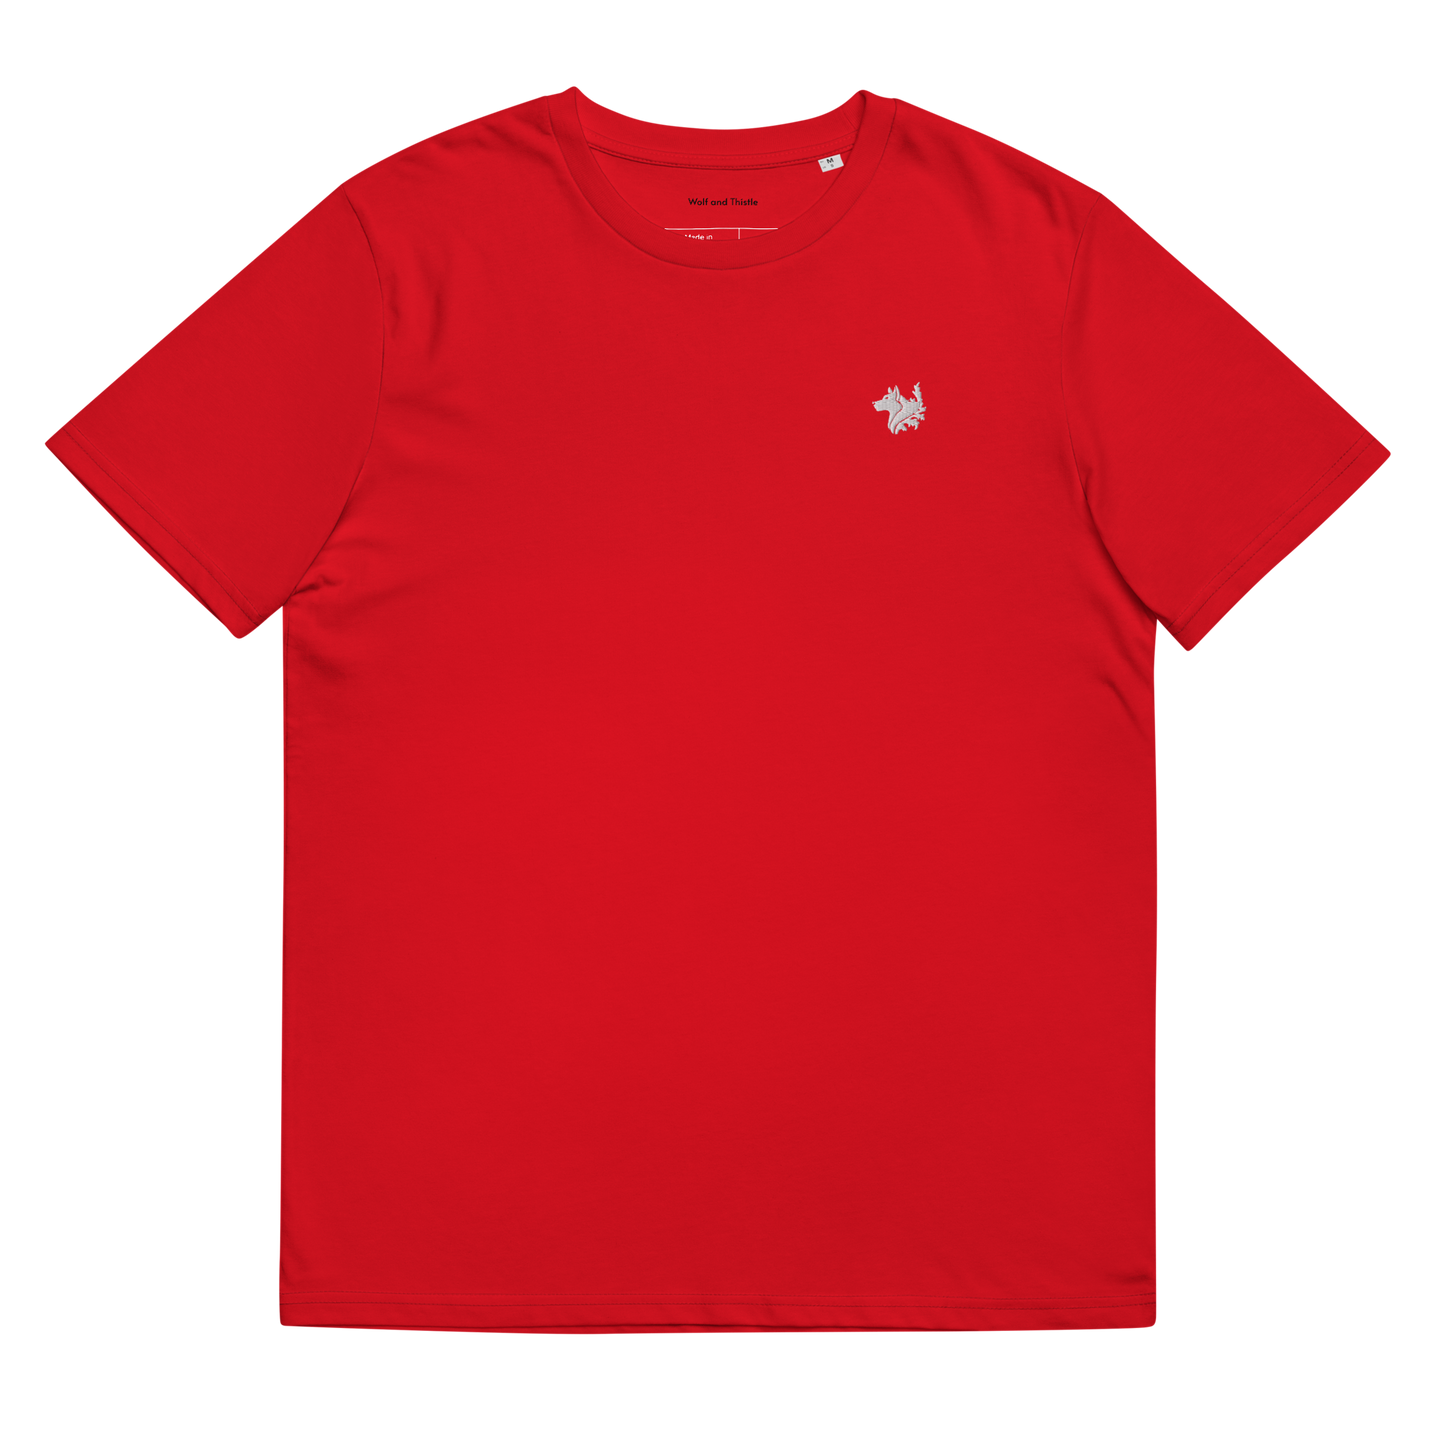 Red Men's Organic Cotton T-shirt